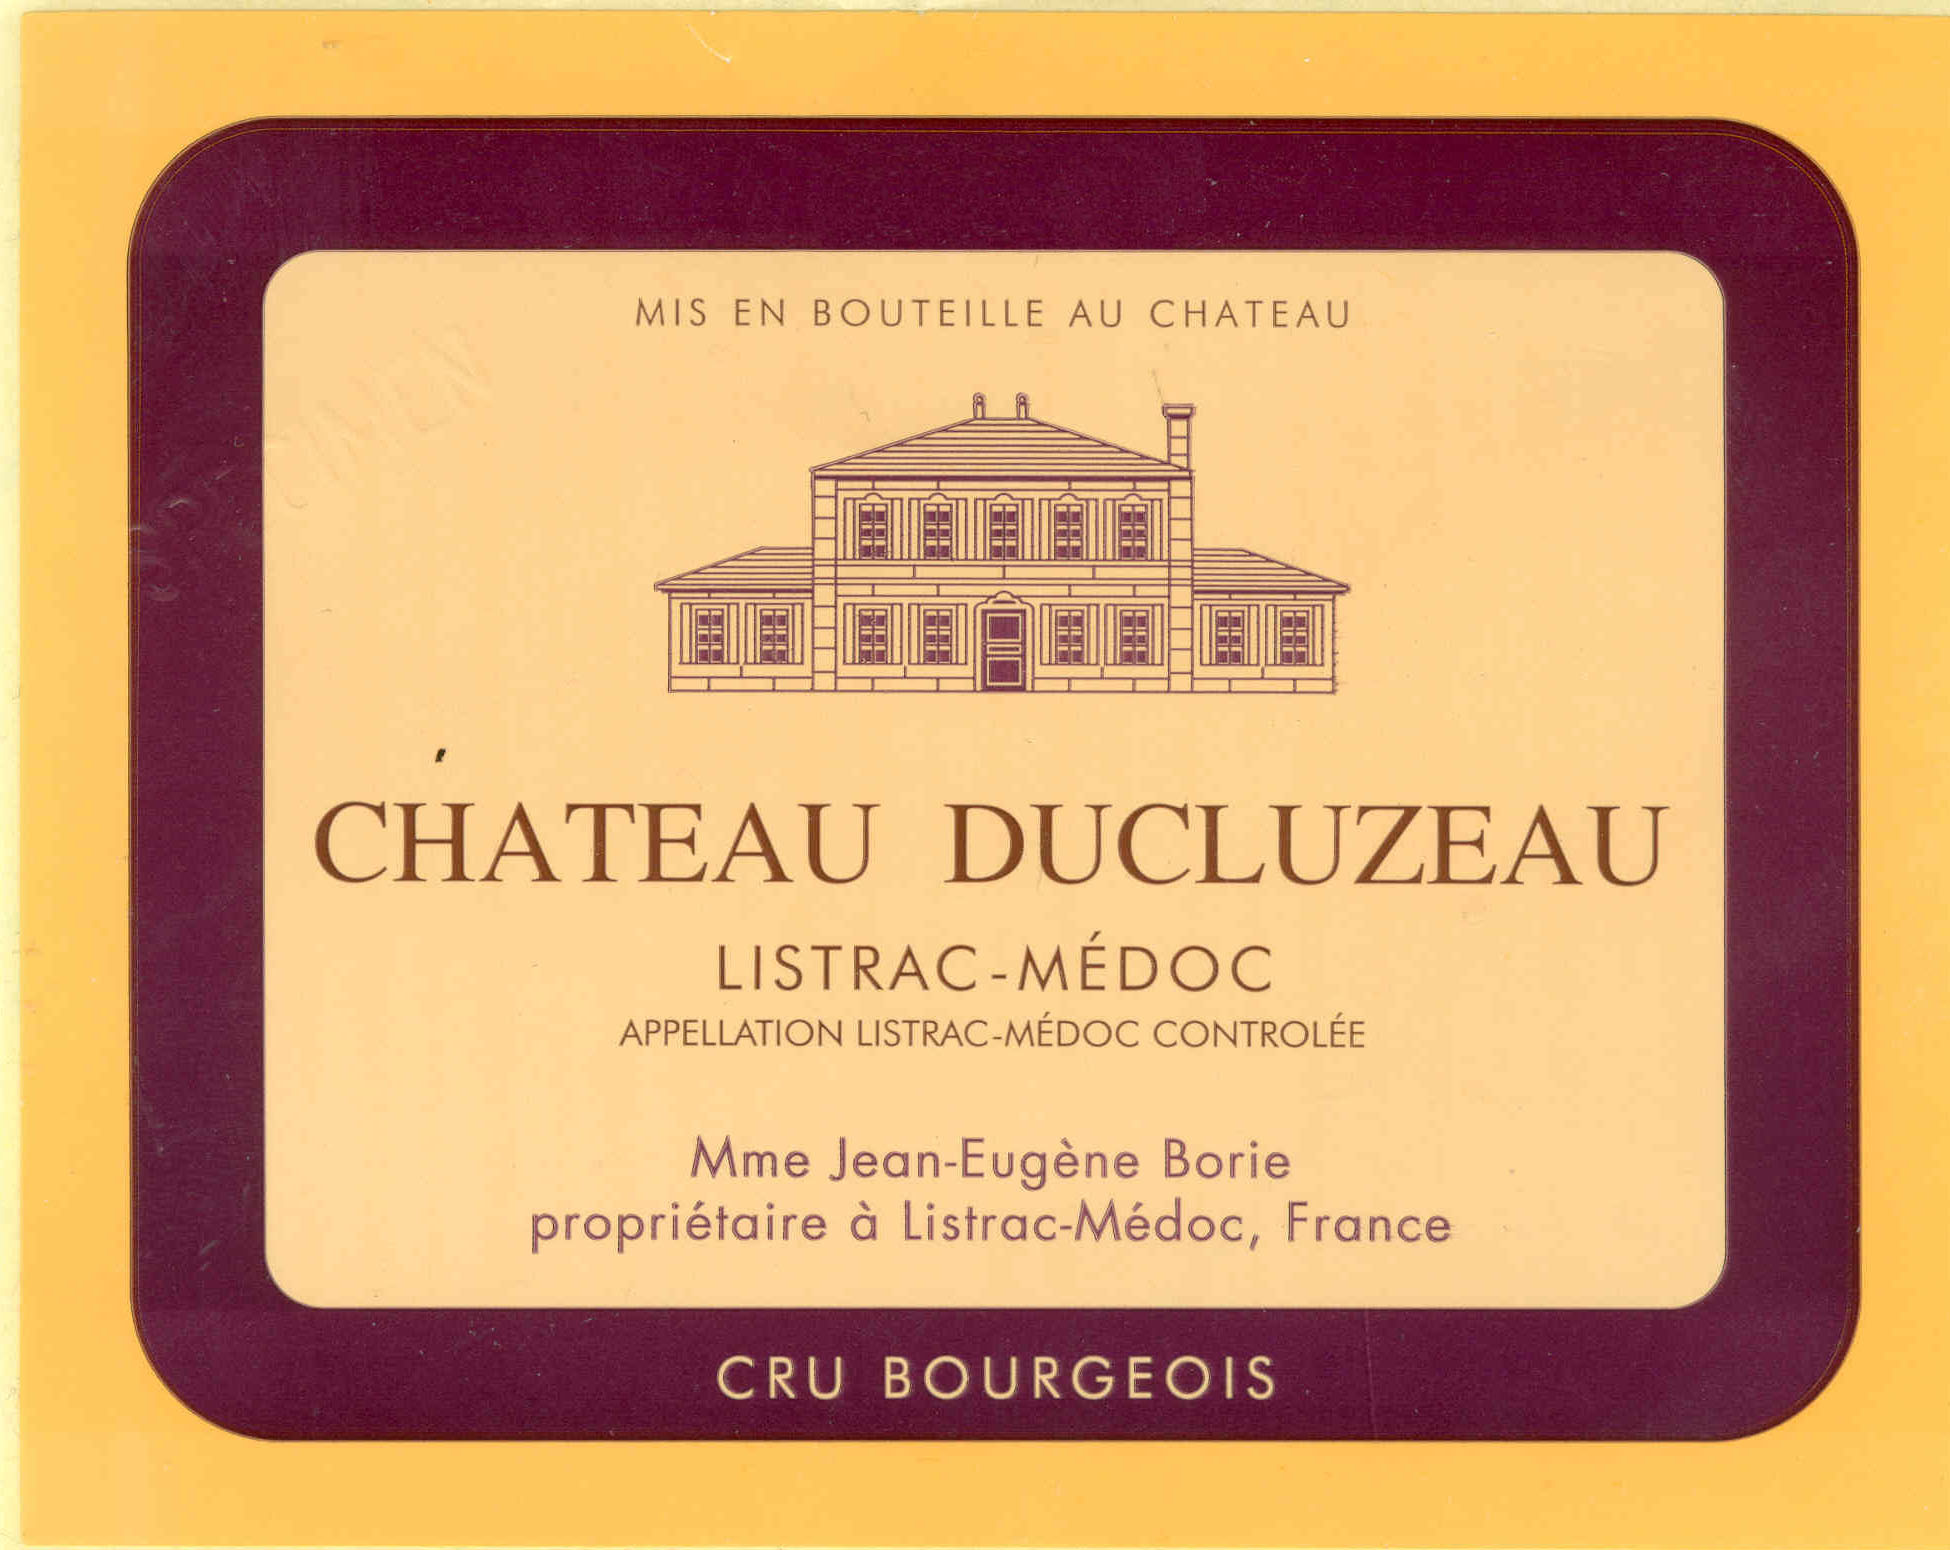 Chateau Ducluzeau label